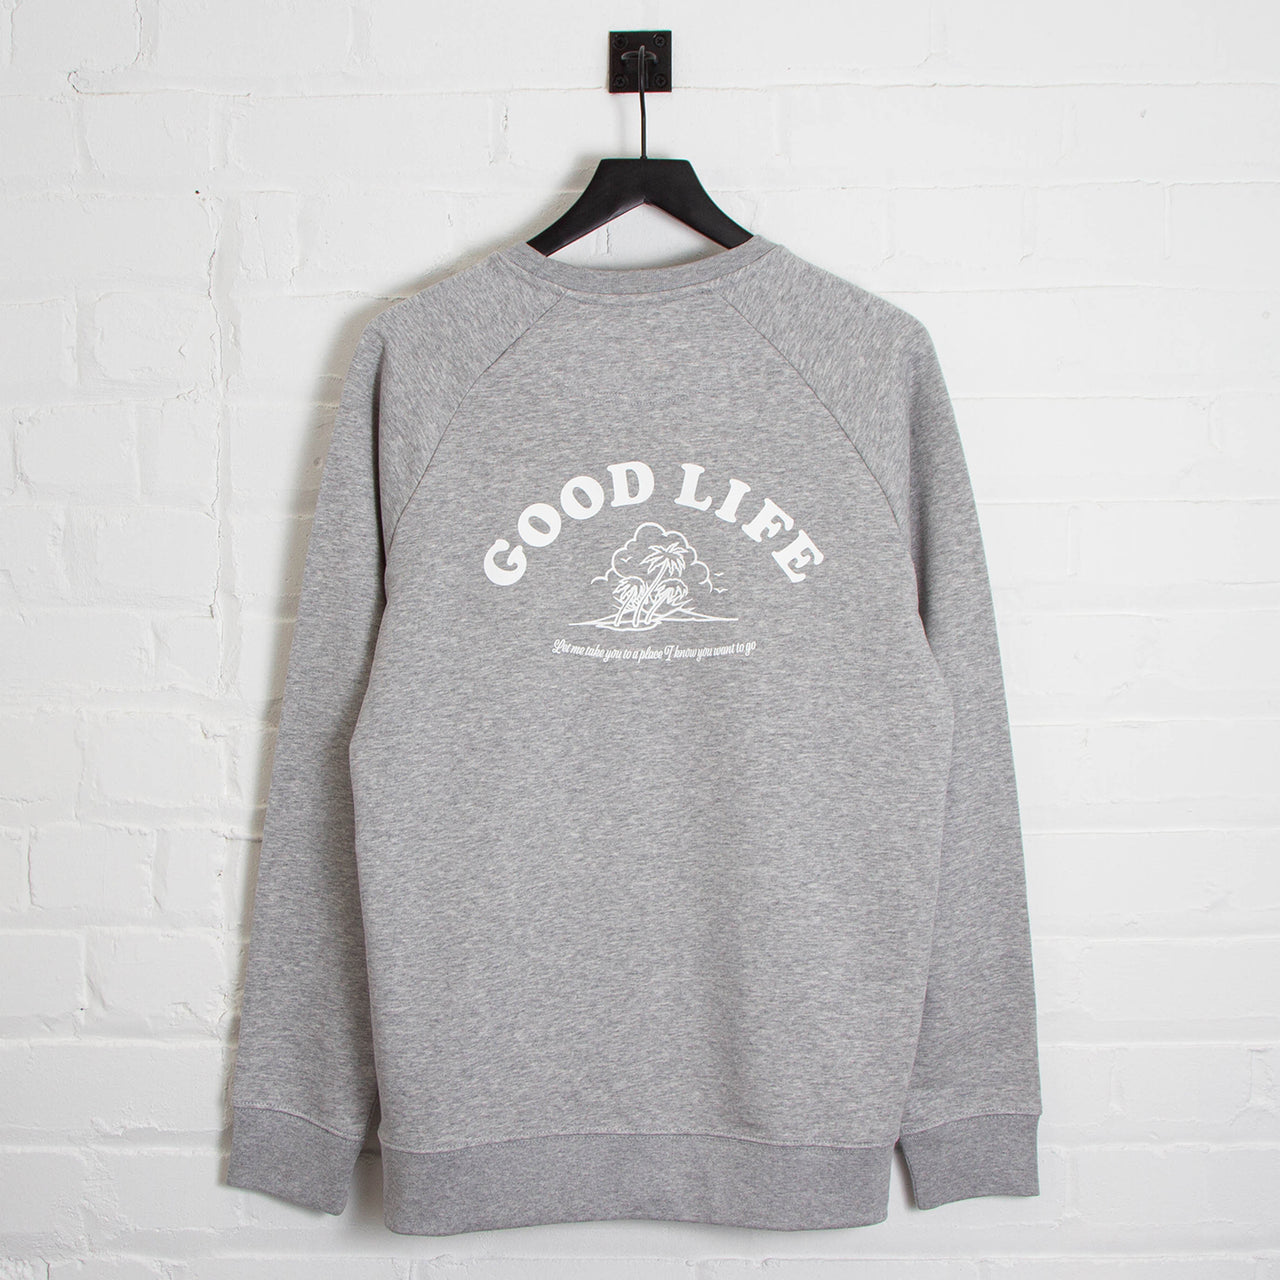 Good Life - Sweatshirt - Heather Grey